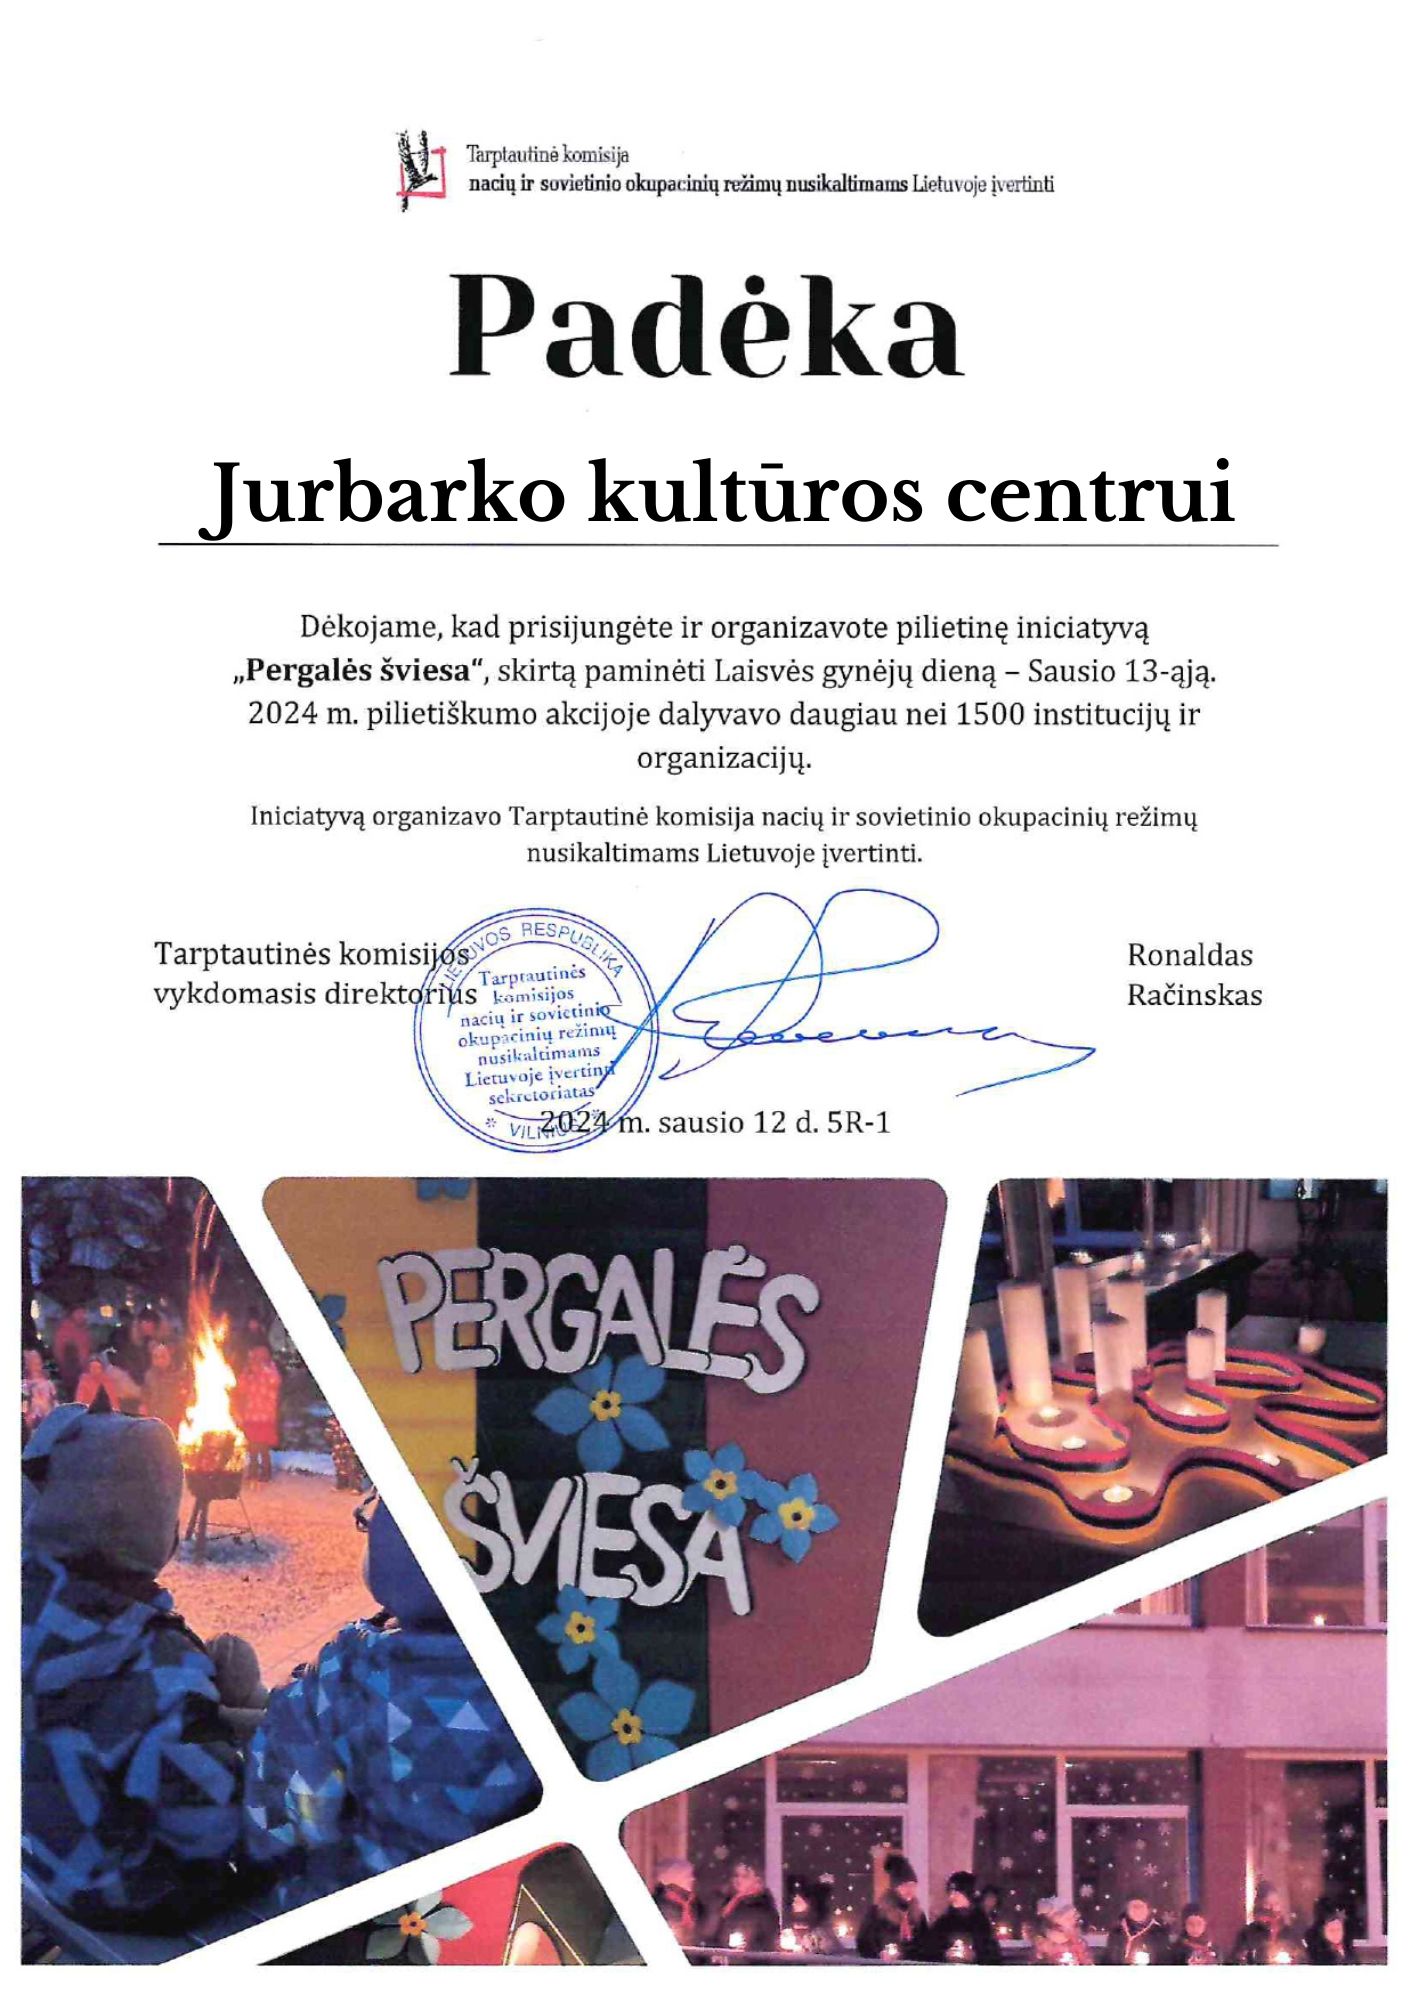 Jurbarko kultūros centrui įteikta padėka